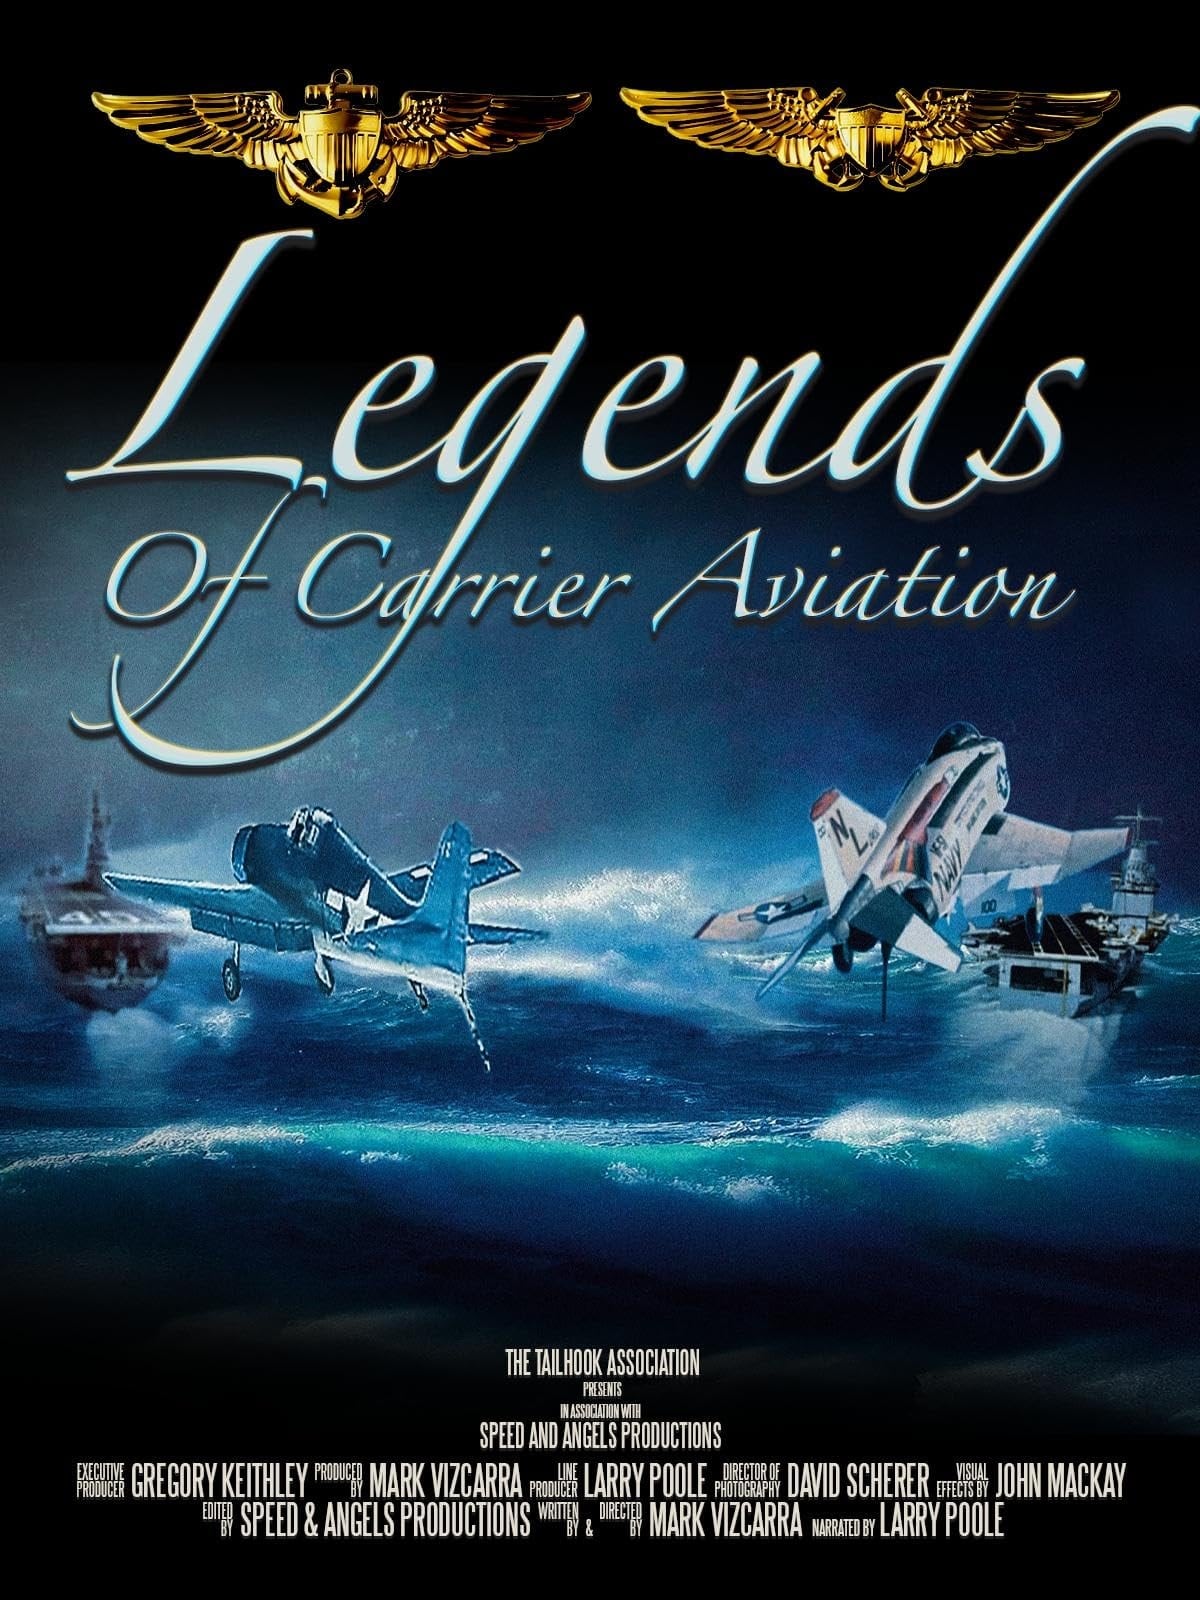 Legends of Carrier Aviation